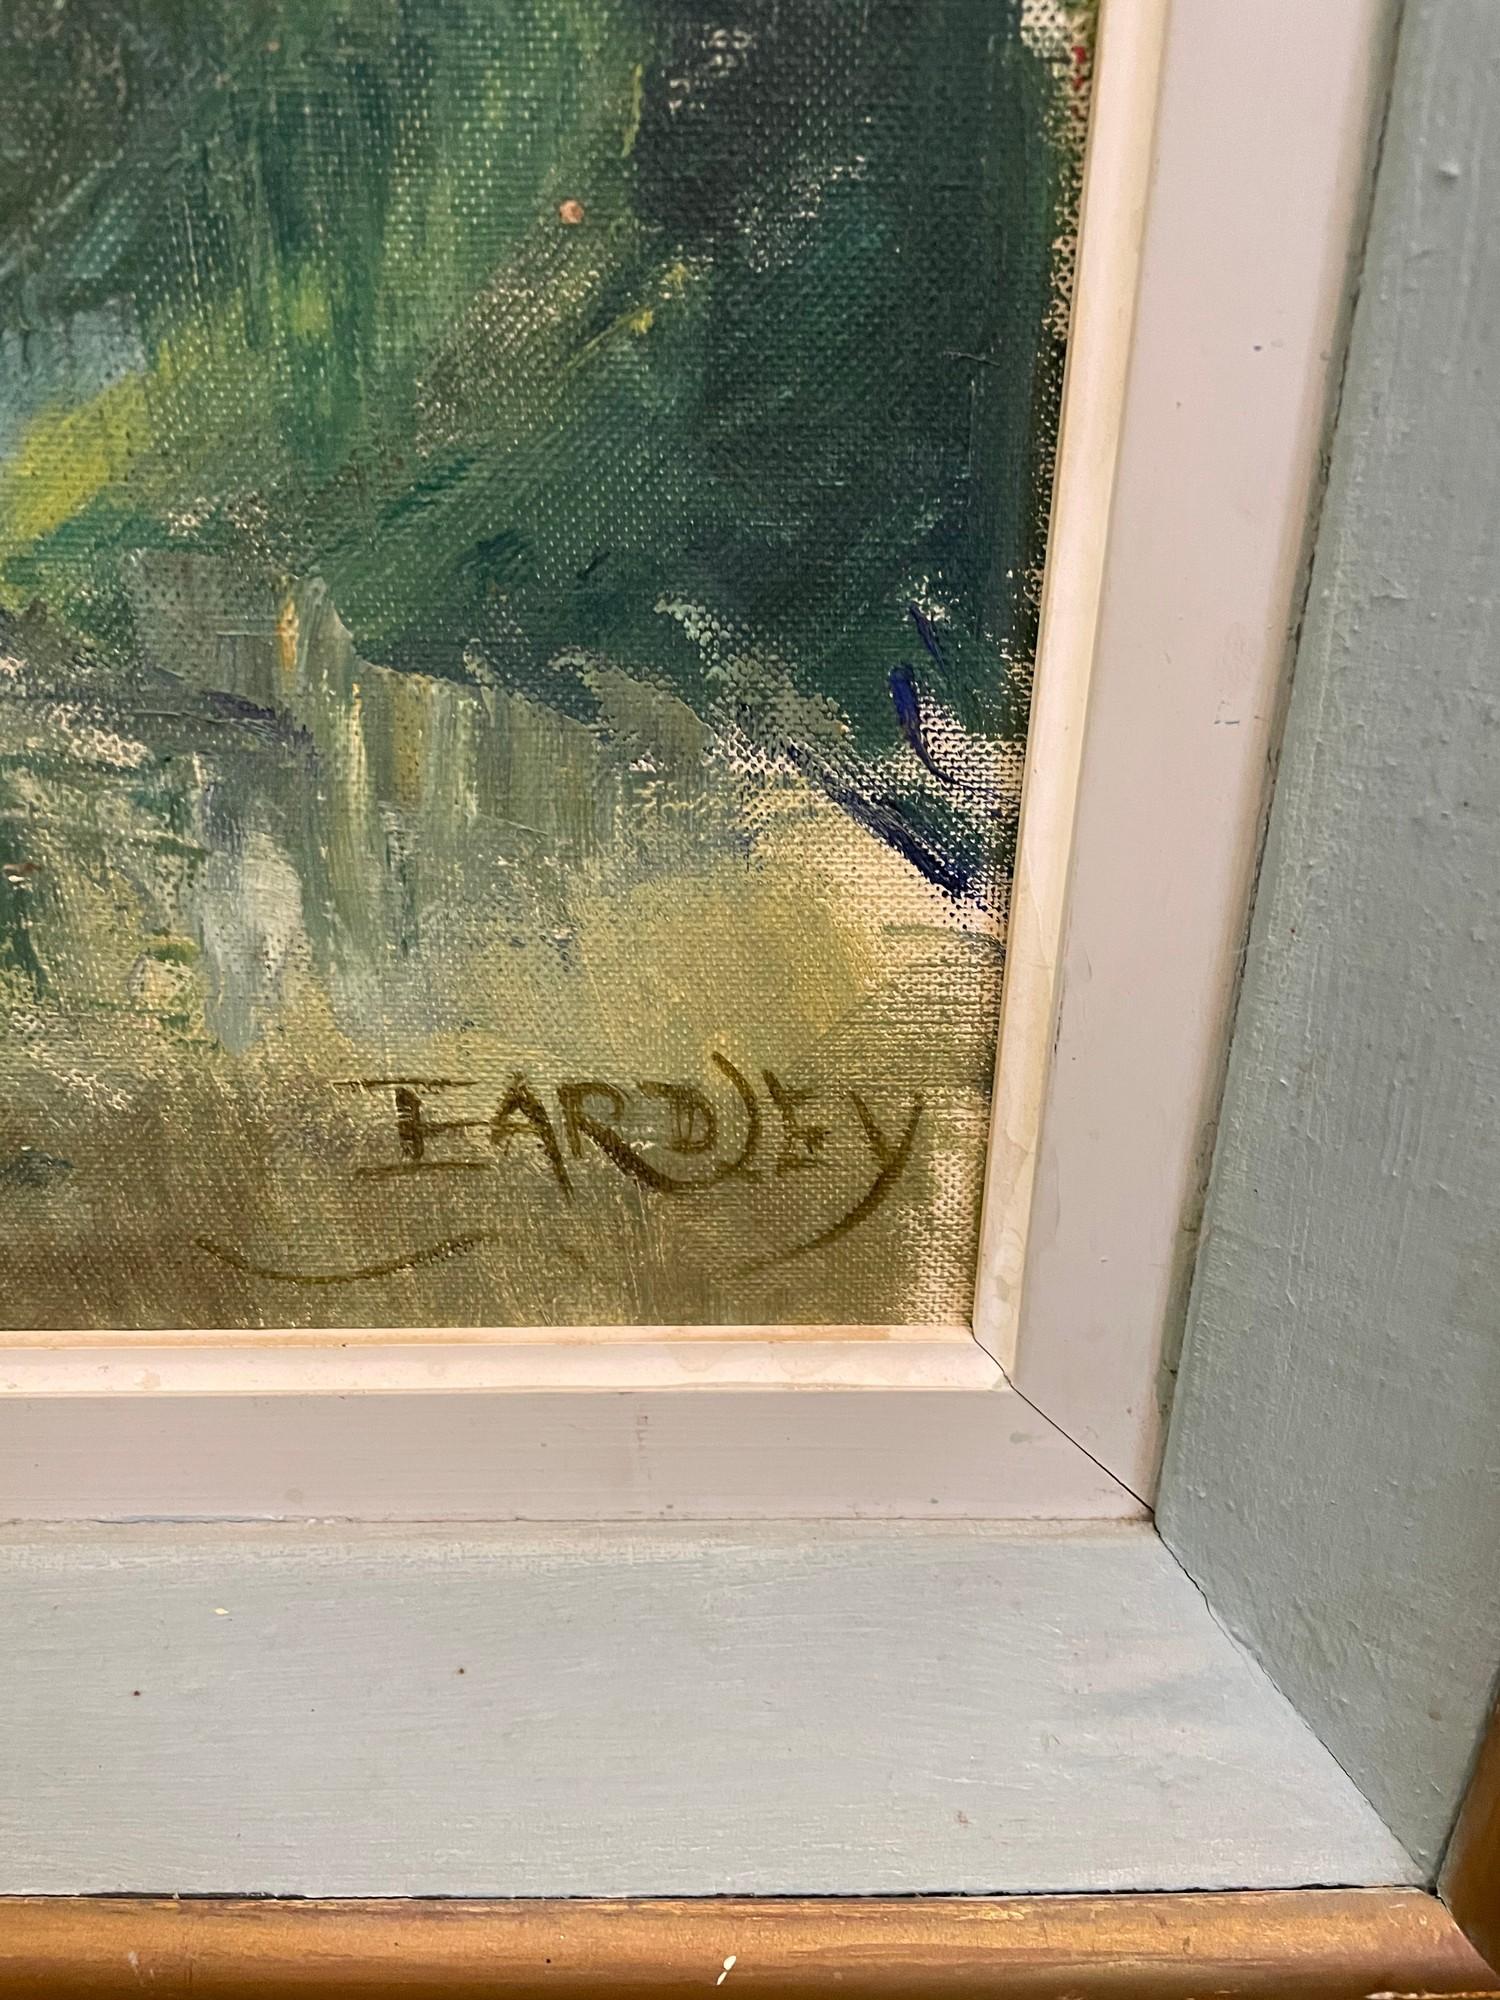 Eardley, still life, oil on canvas, signed, 49 x 56 cm - Image 2 of 3